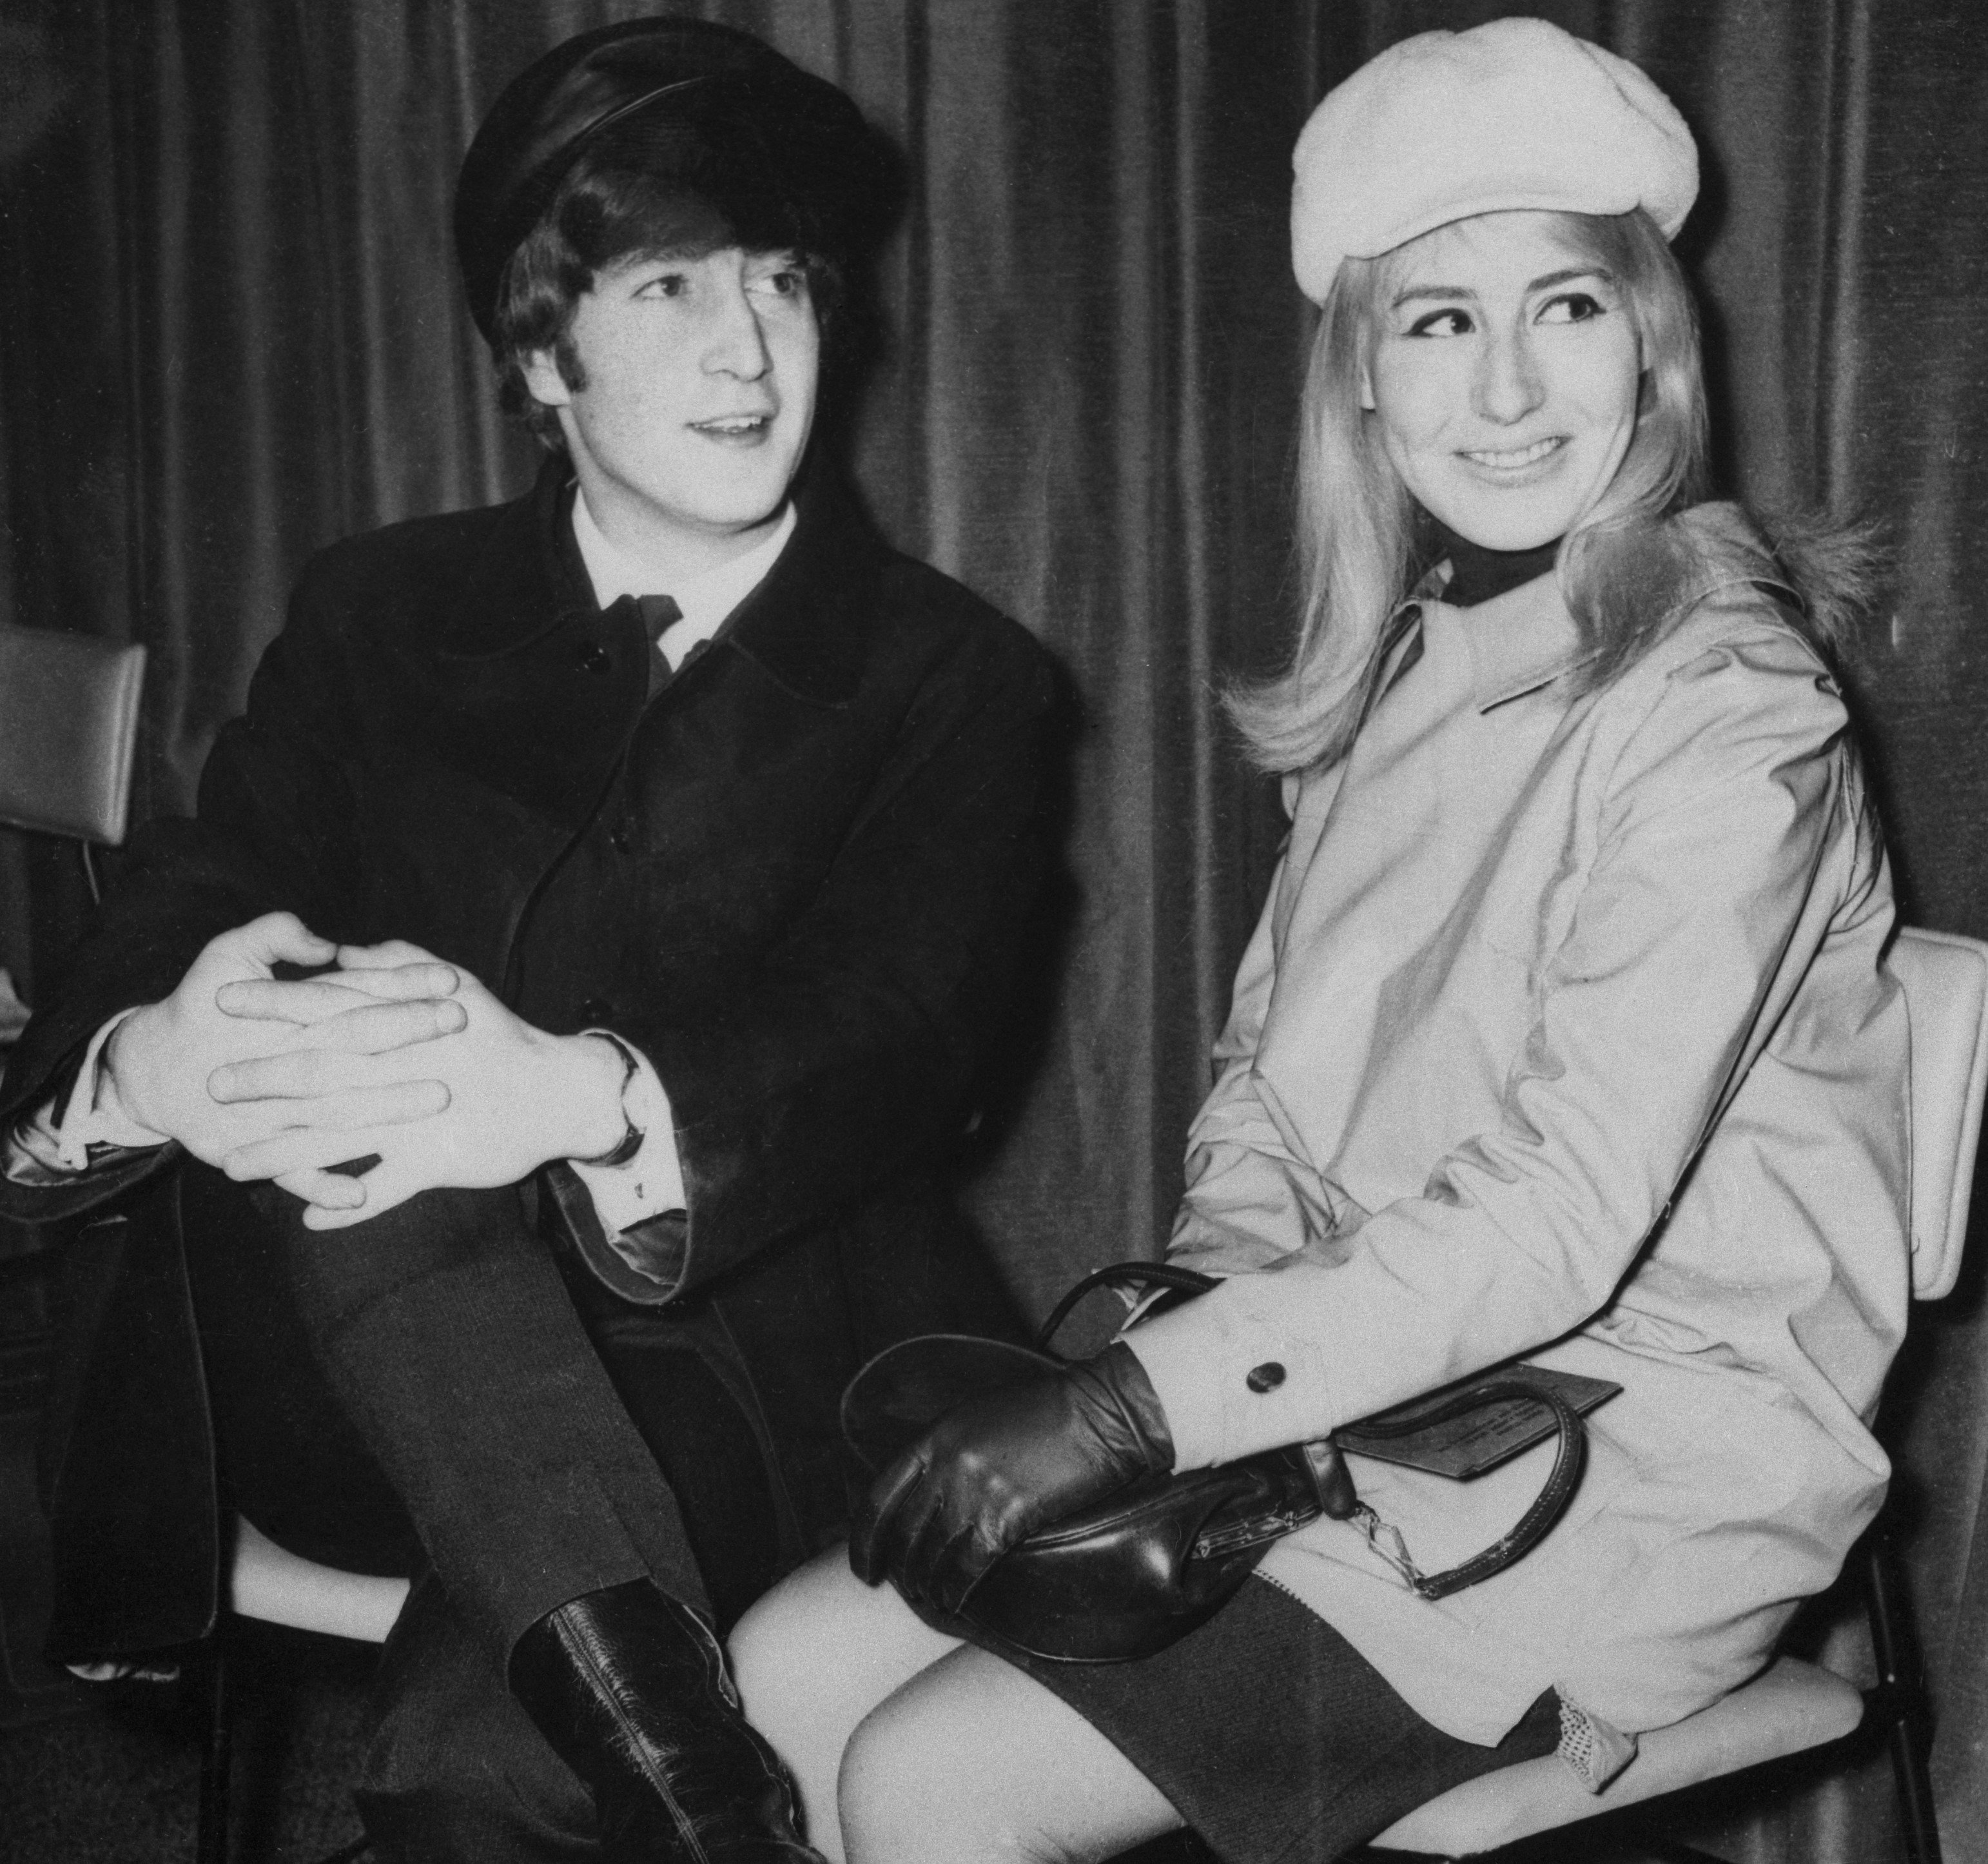 John Lennon and Cynthia Lennon sitting on chairs